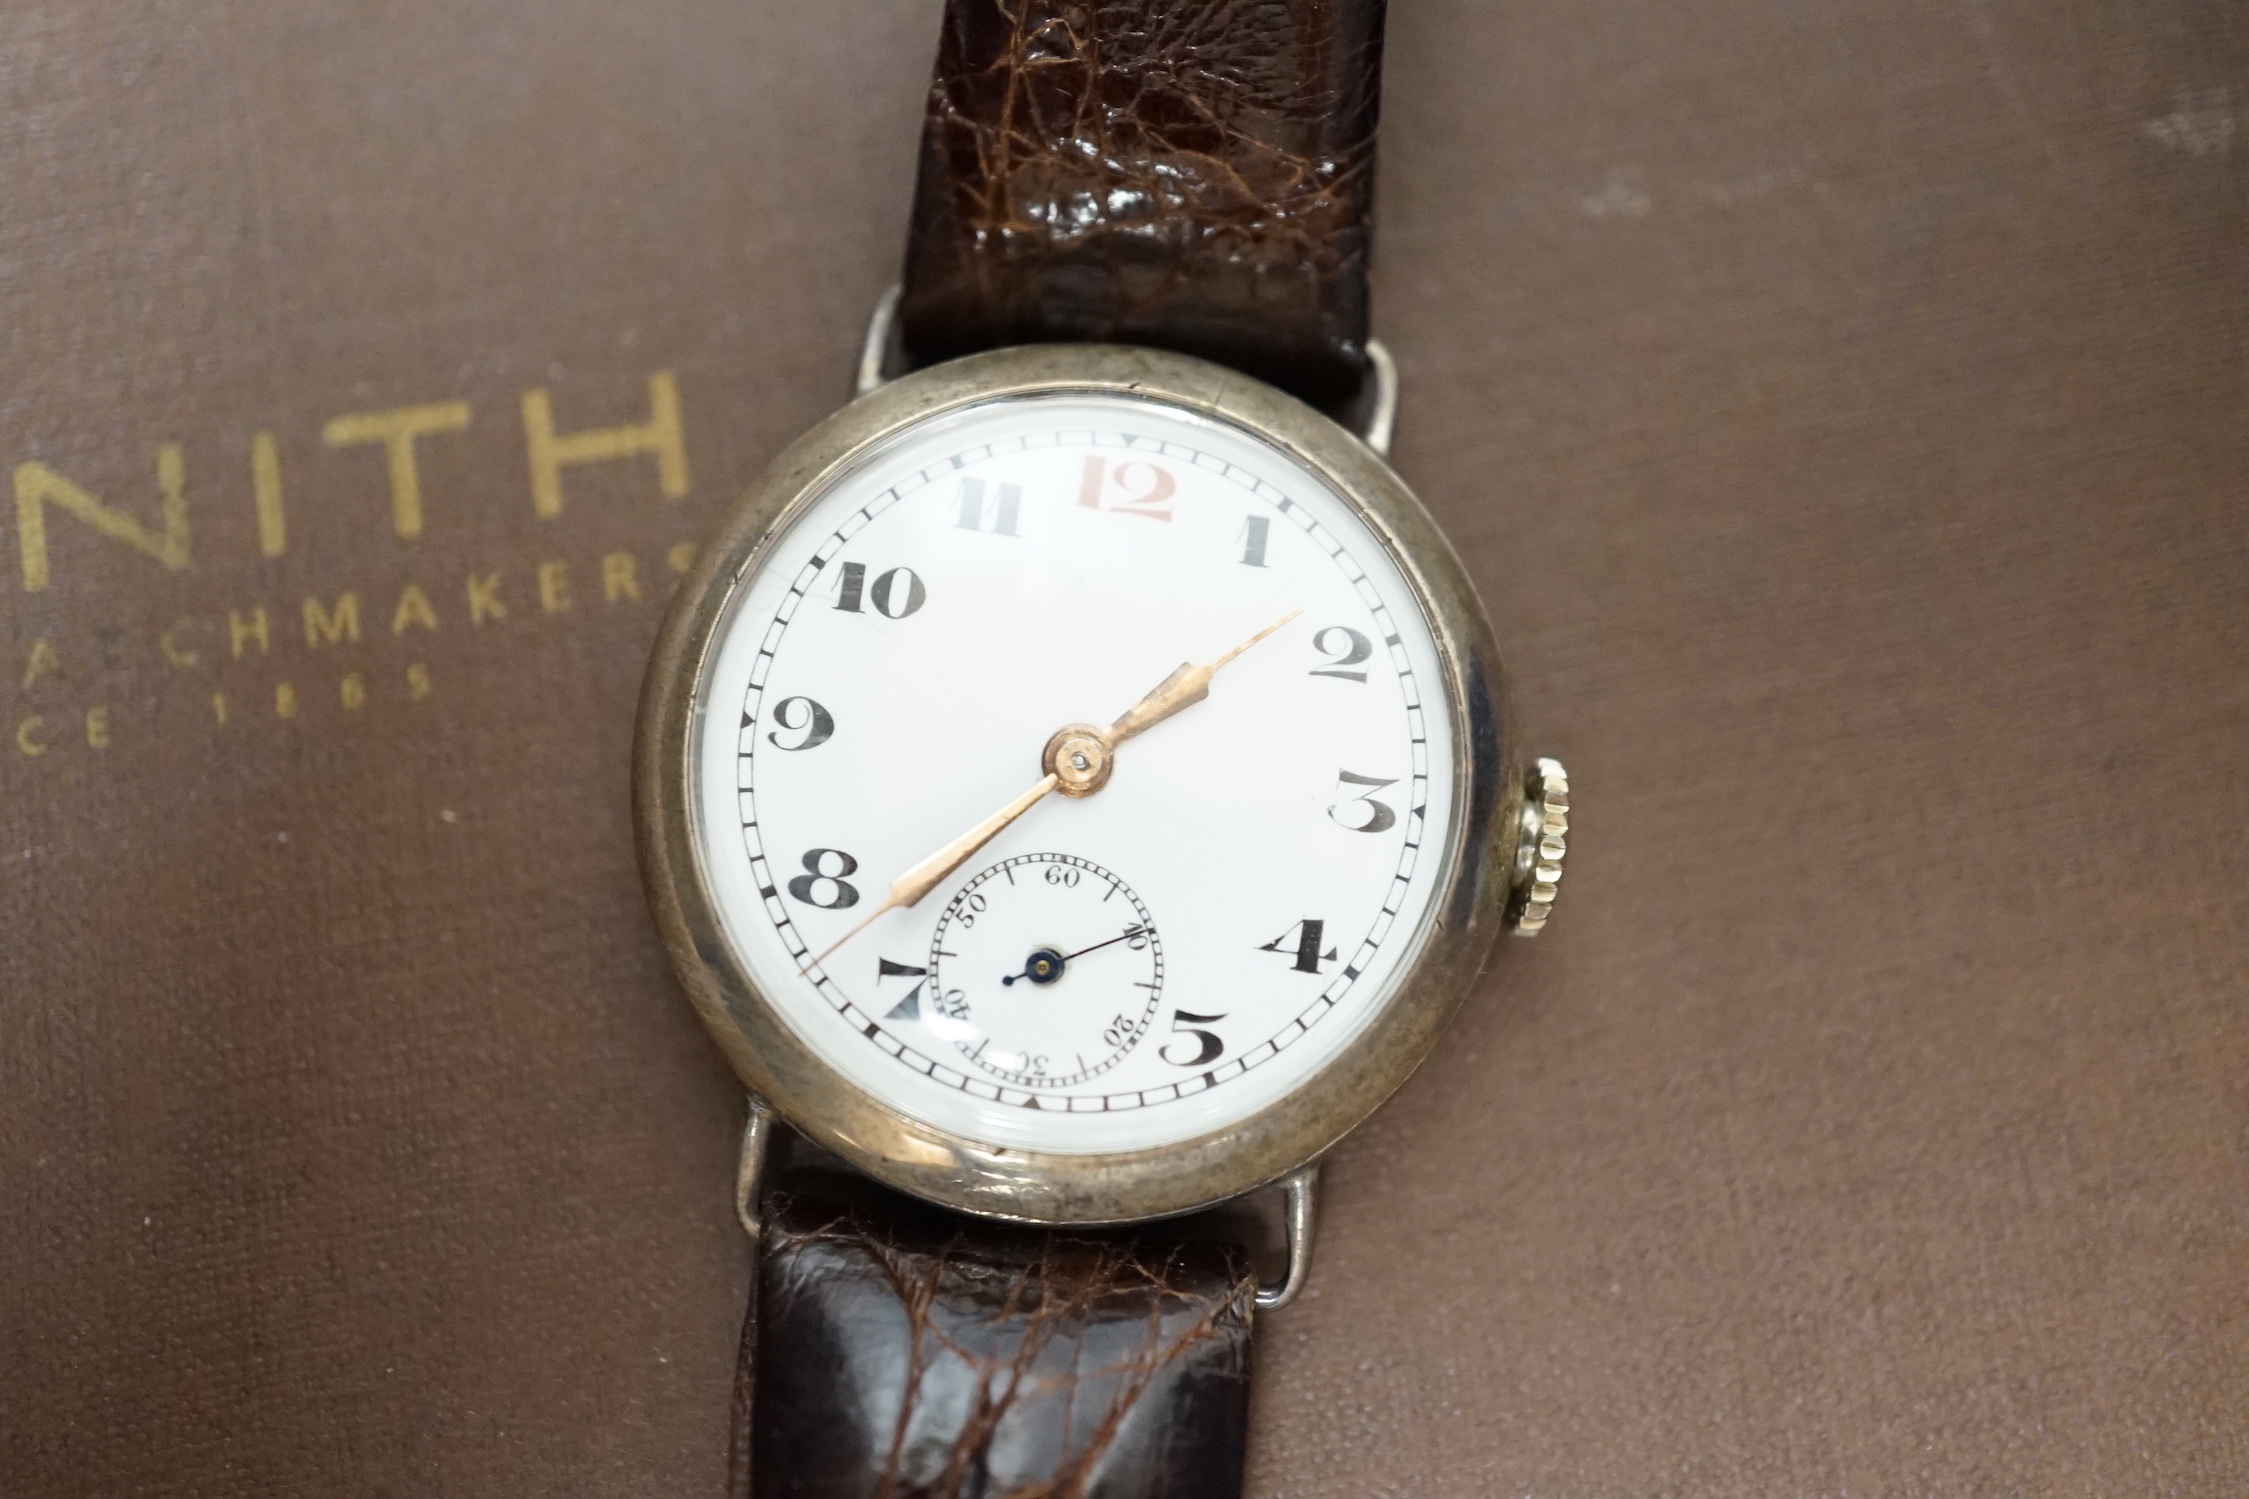 A Rolex watch box, Zenith watch box, Cartier watch box and a gentleman's early 20th century silver manual wind wrist watch.